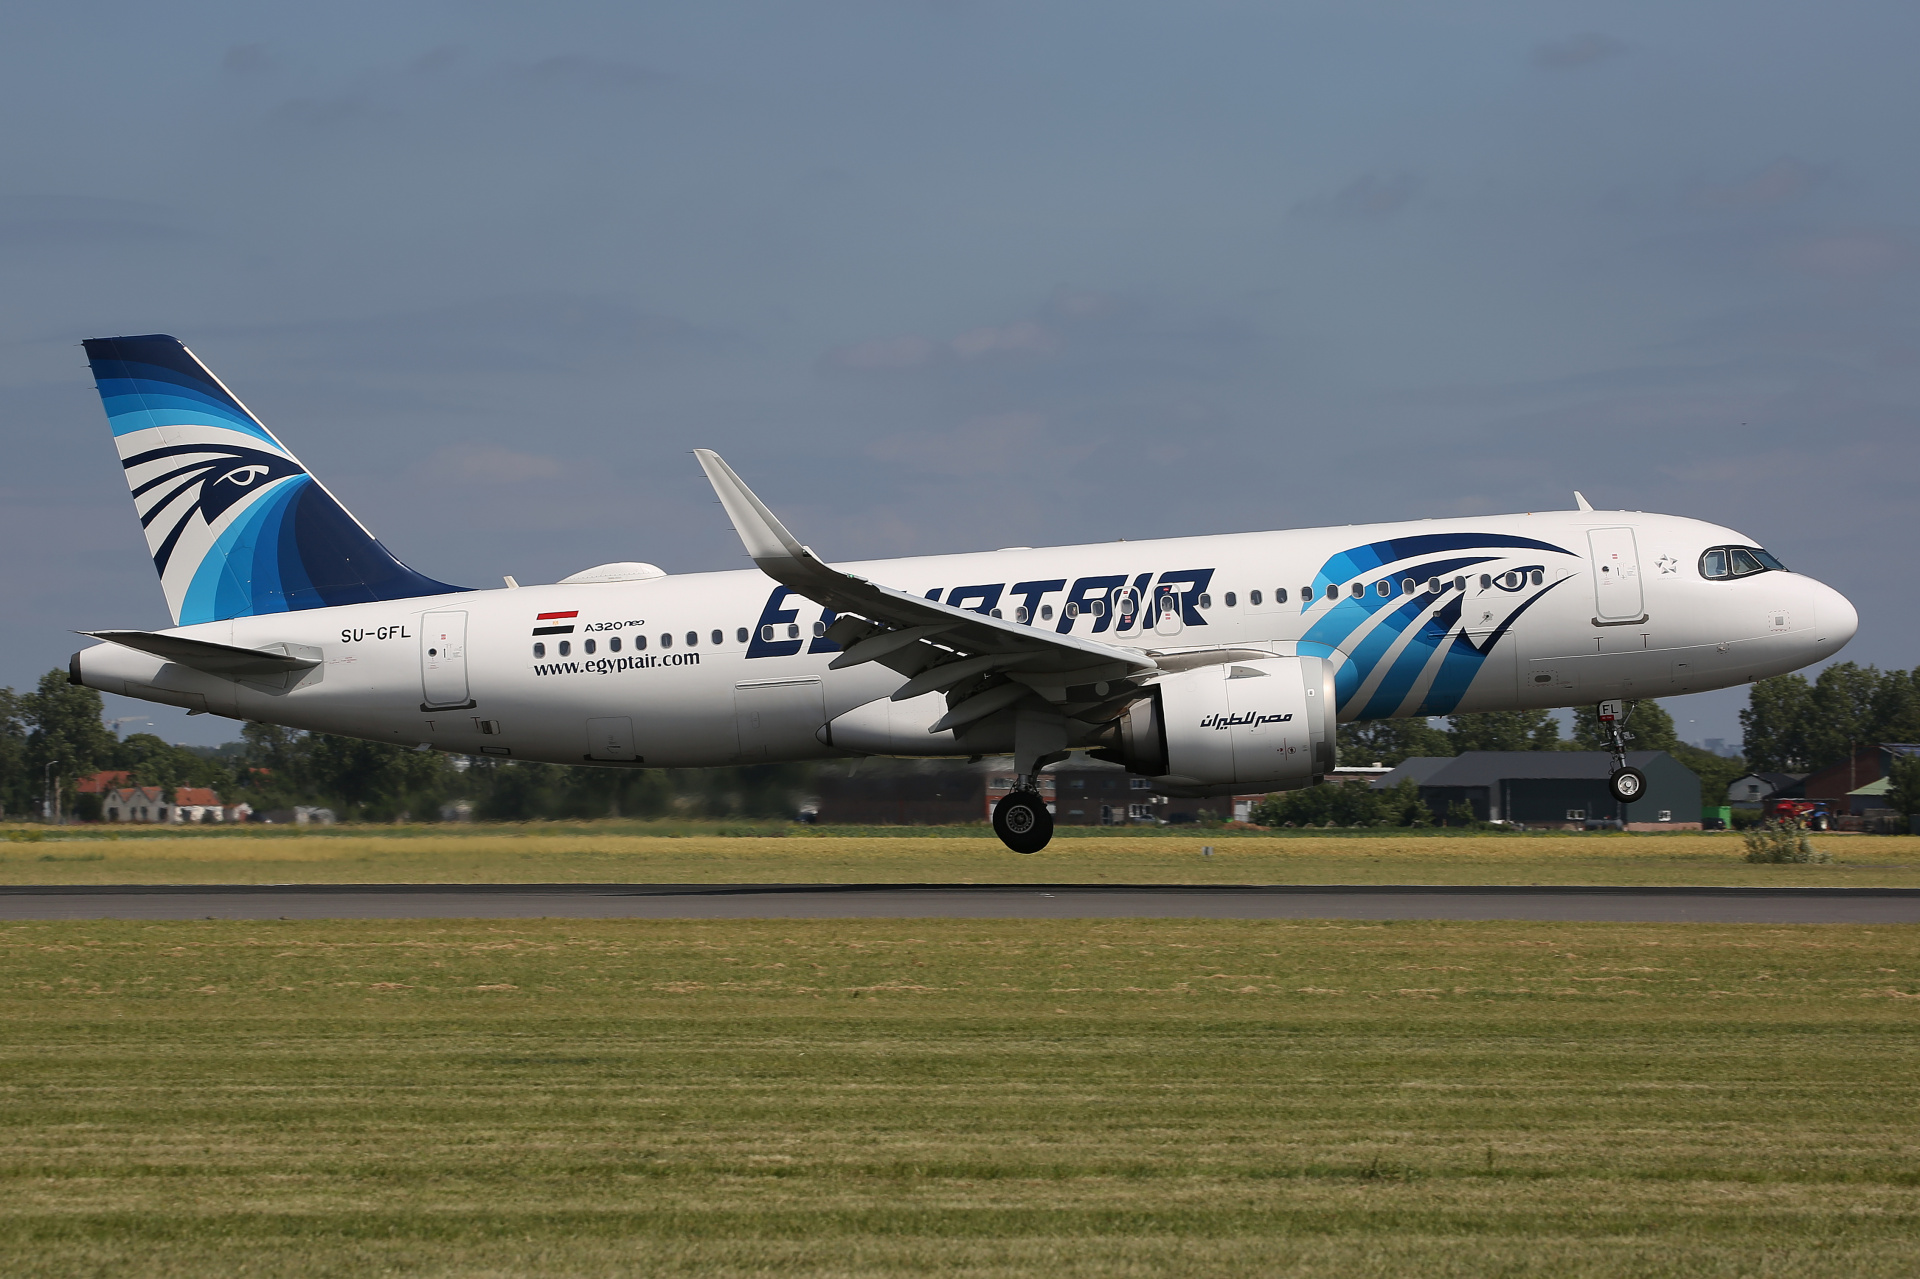 SU-GFL, EgyptAir (Aircraft » Schiphol Spotting » Airbus A320neo)